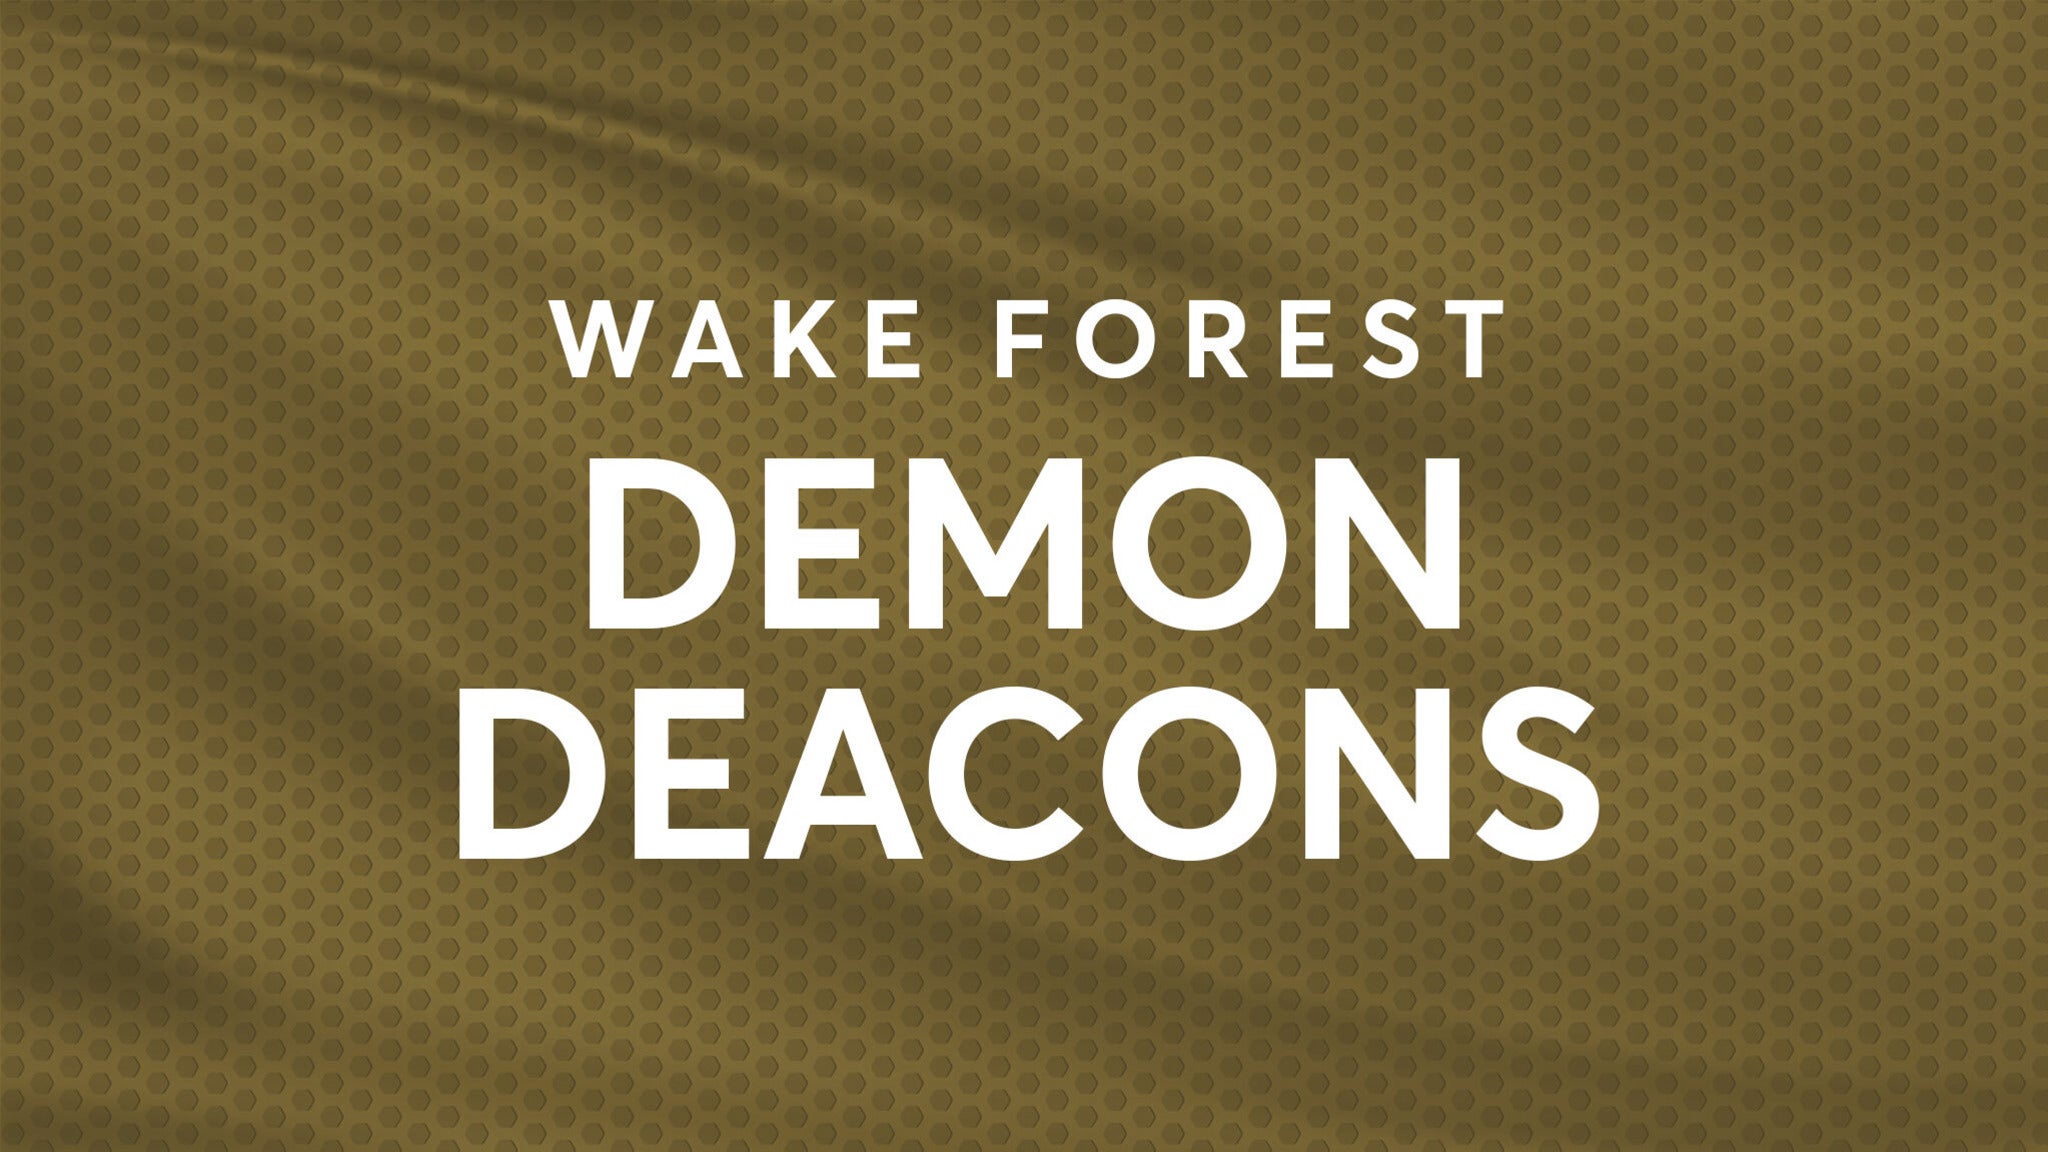 Wake Forest Demon Deacons Womens Basketball presale information on freepresalepasswords.com